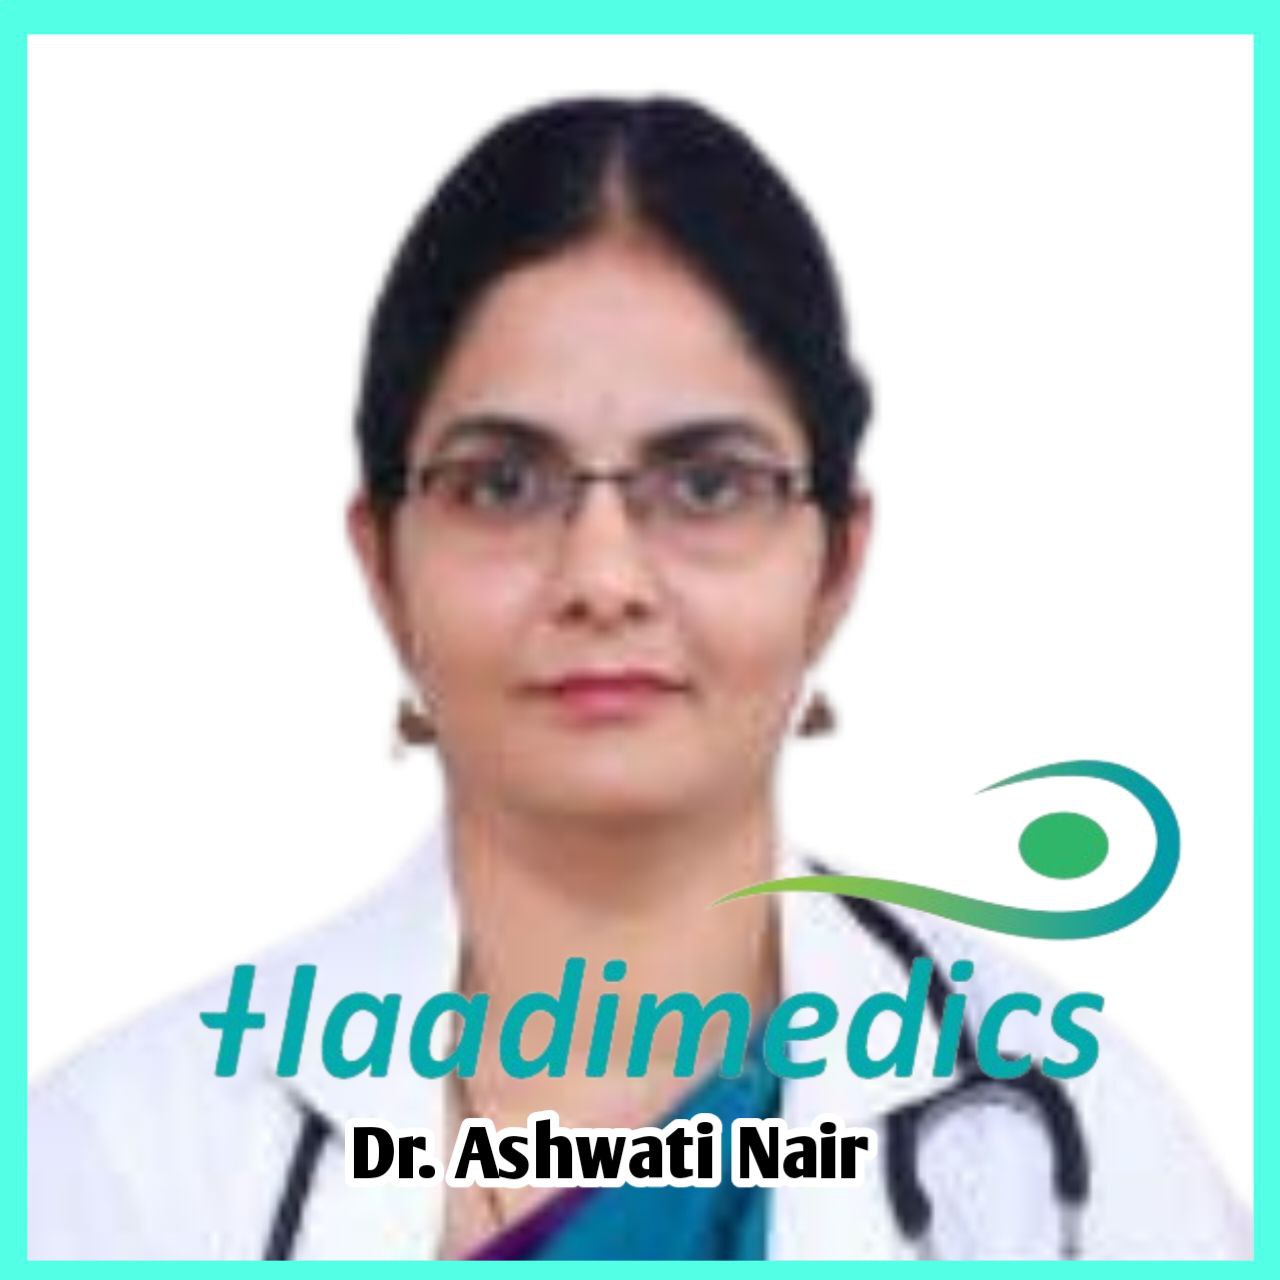 Dr. Ashwati Nair